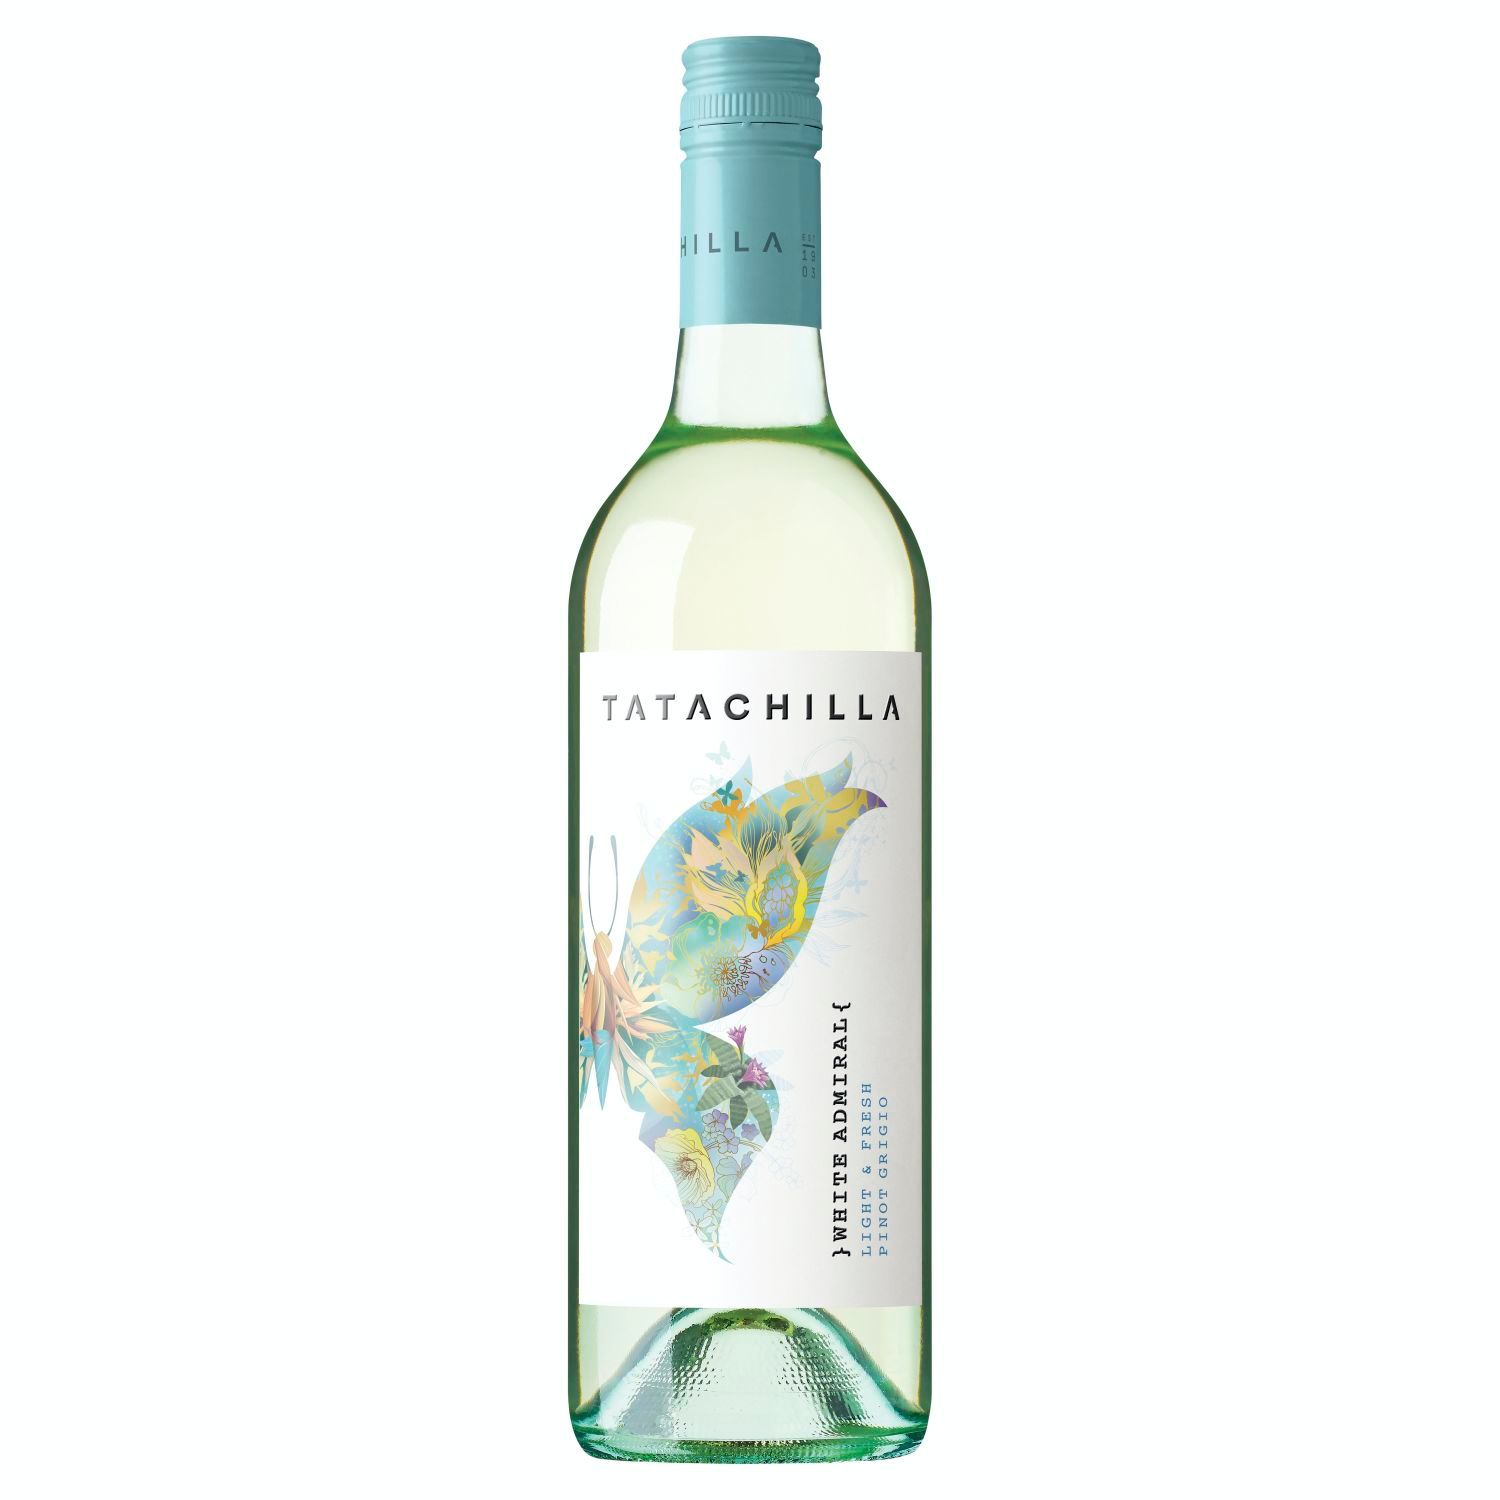 Tatachilla White Admiral Pinot Grigio 750mL<br /> <br />Alcohol Volume: 9.40%<br /><br />Pack Format: Bottle<br /><br />Standard Drinks: 5.6</br /><br />Pack Type: Bottle<br /><br />Country of Origin: Australia<br /><br />Region: South Australia<br /><br />Vintage: '2019<br />